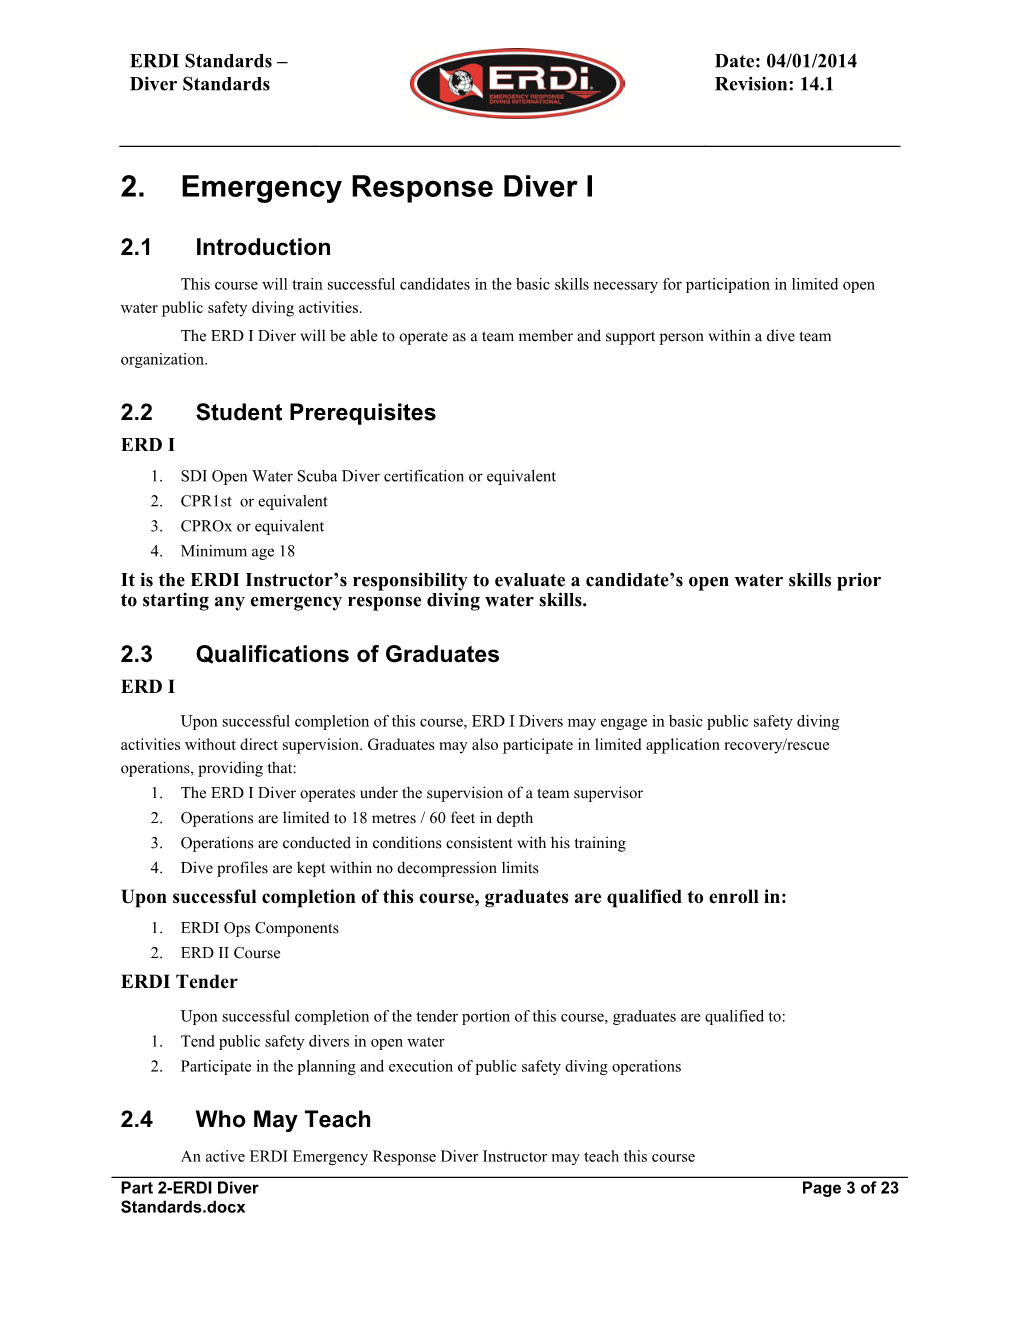 2. Emergency Response Diver I